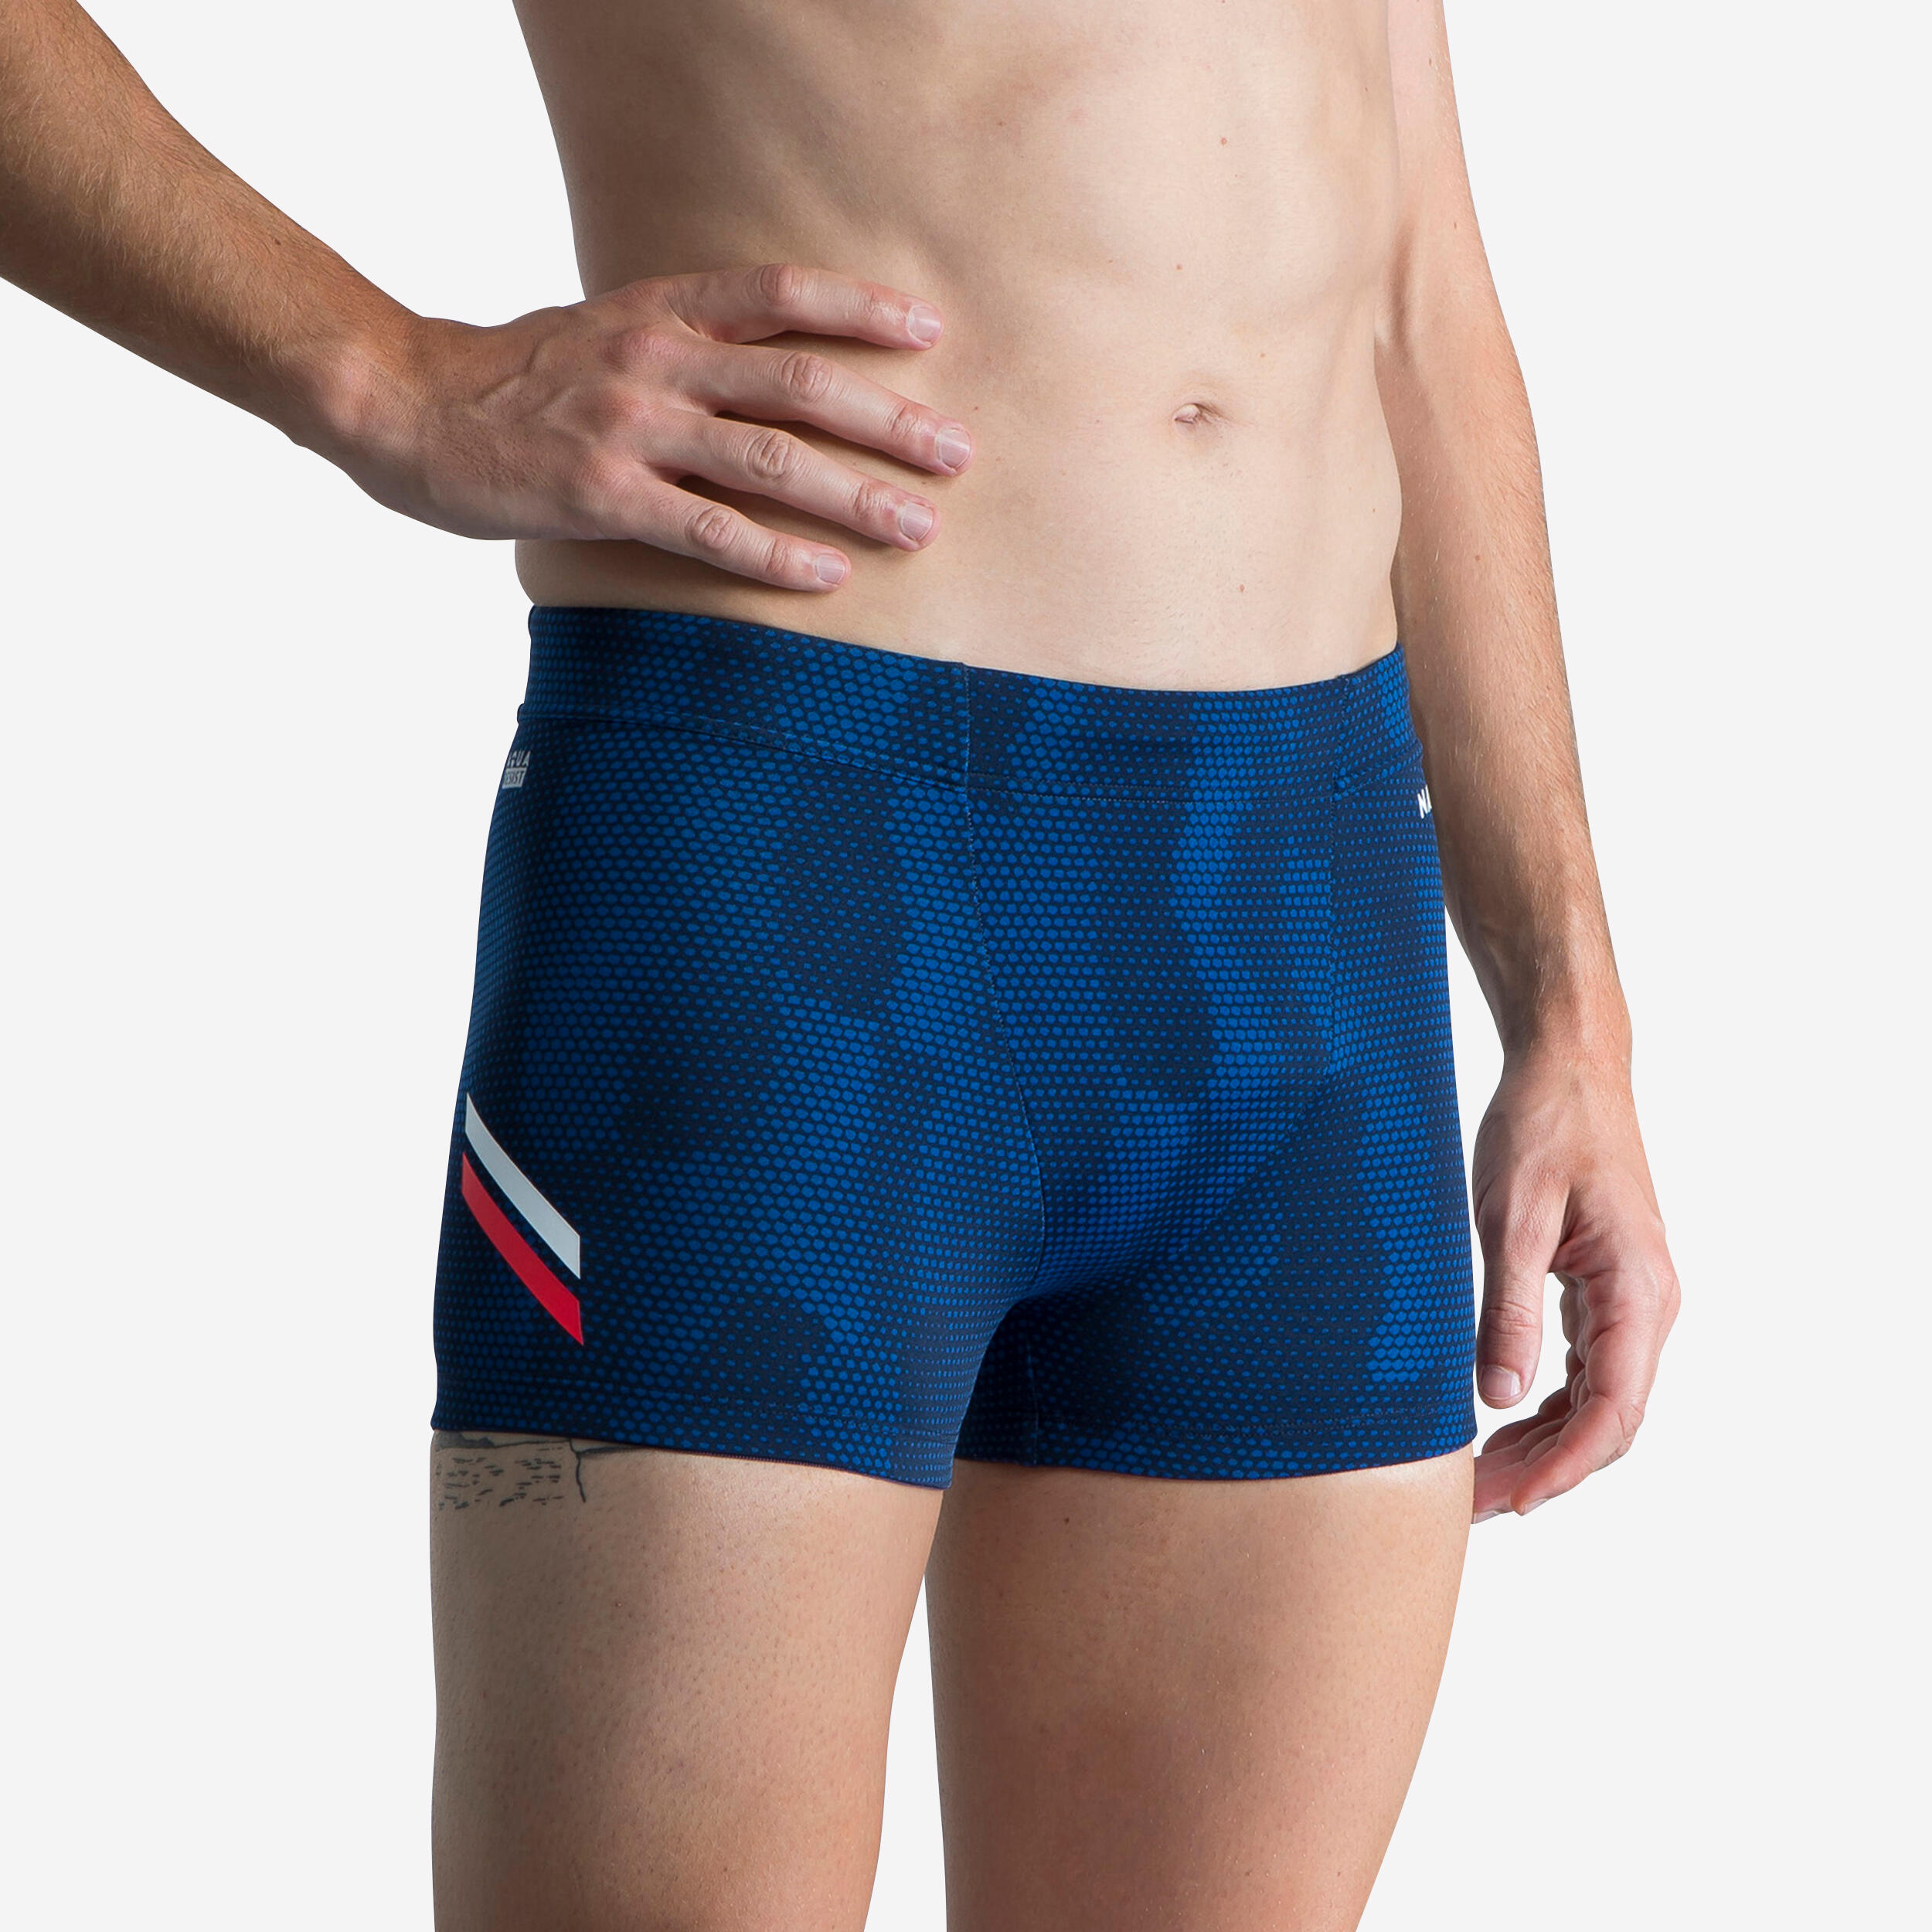 Image of Men's Swimming Boxers - Fiti Blue